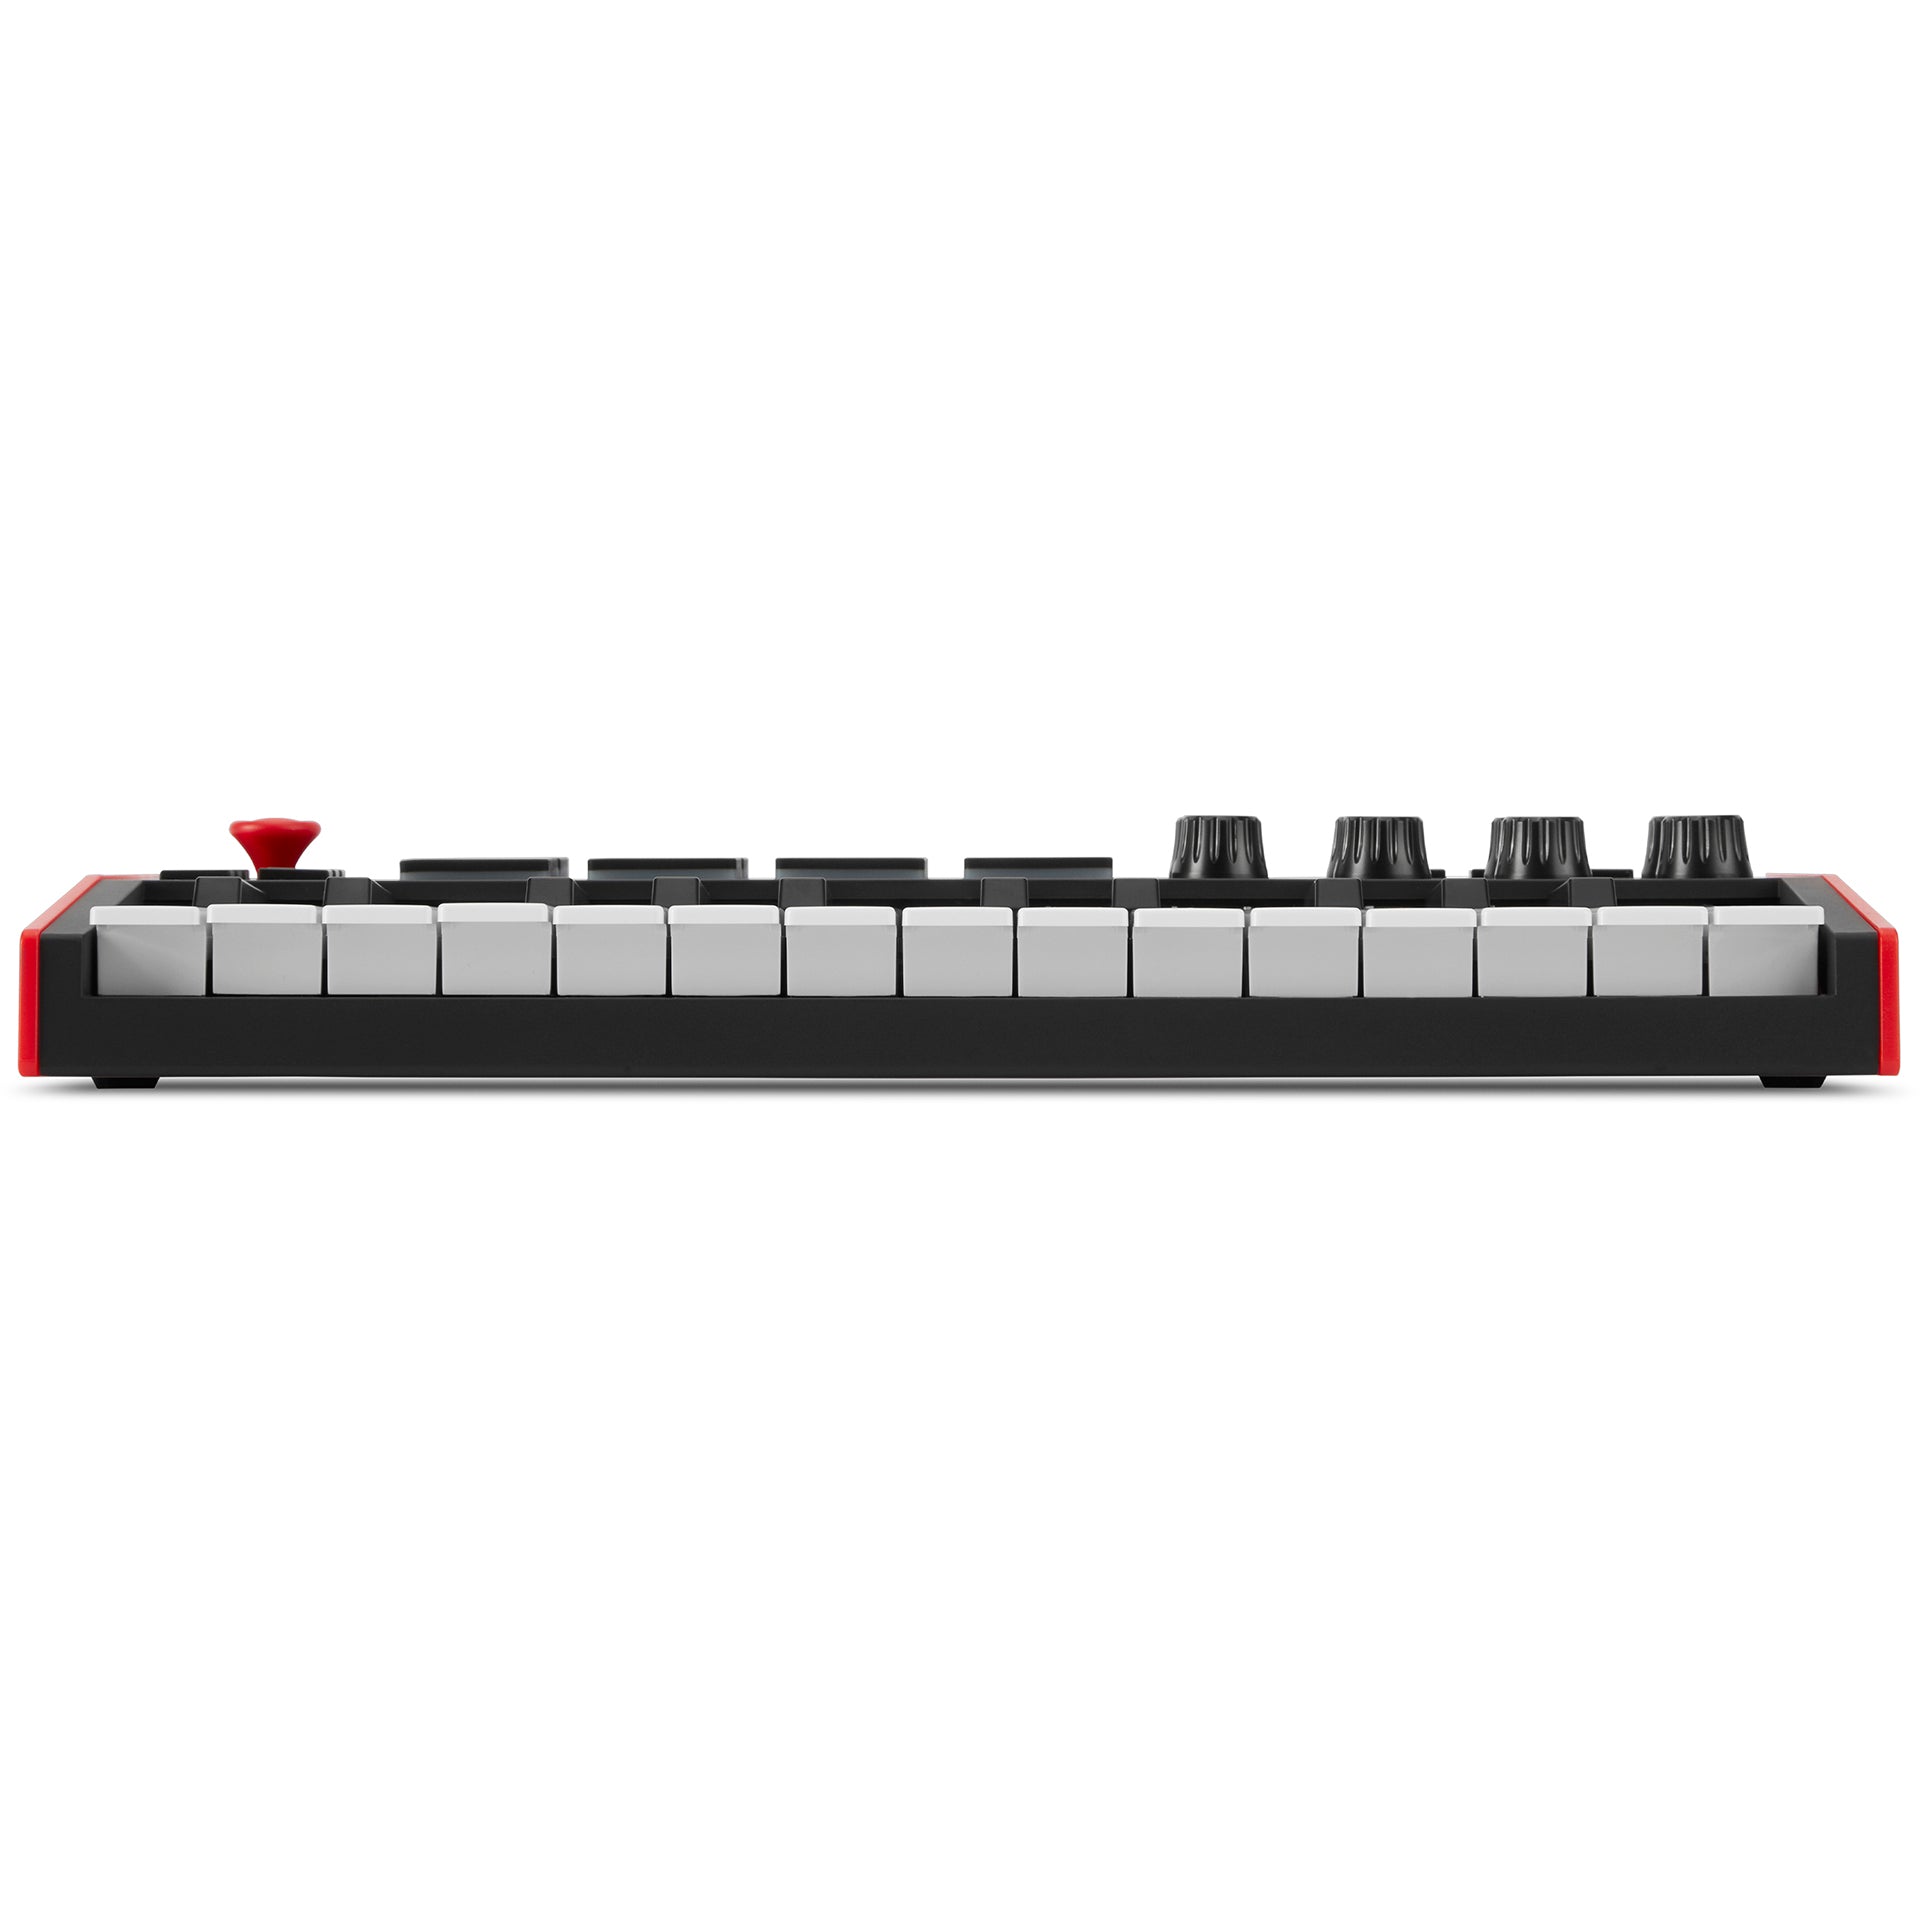 Akai MPK Mini MK3 Keyboard Controller - Black – Alto Music